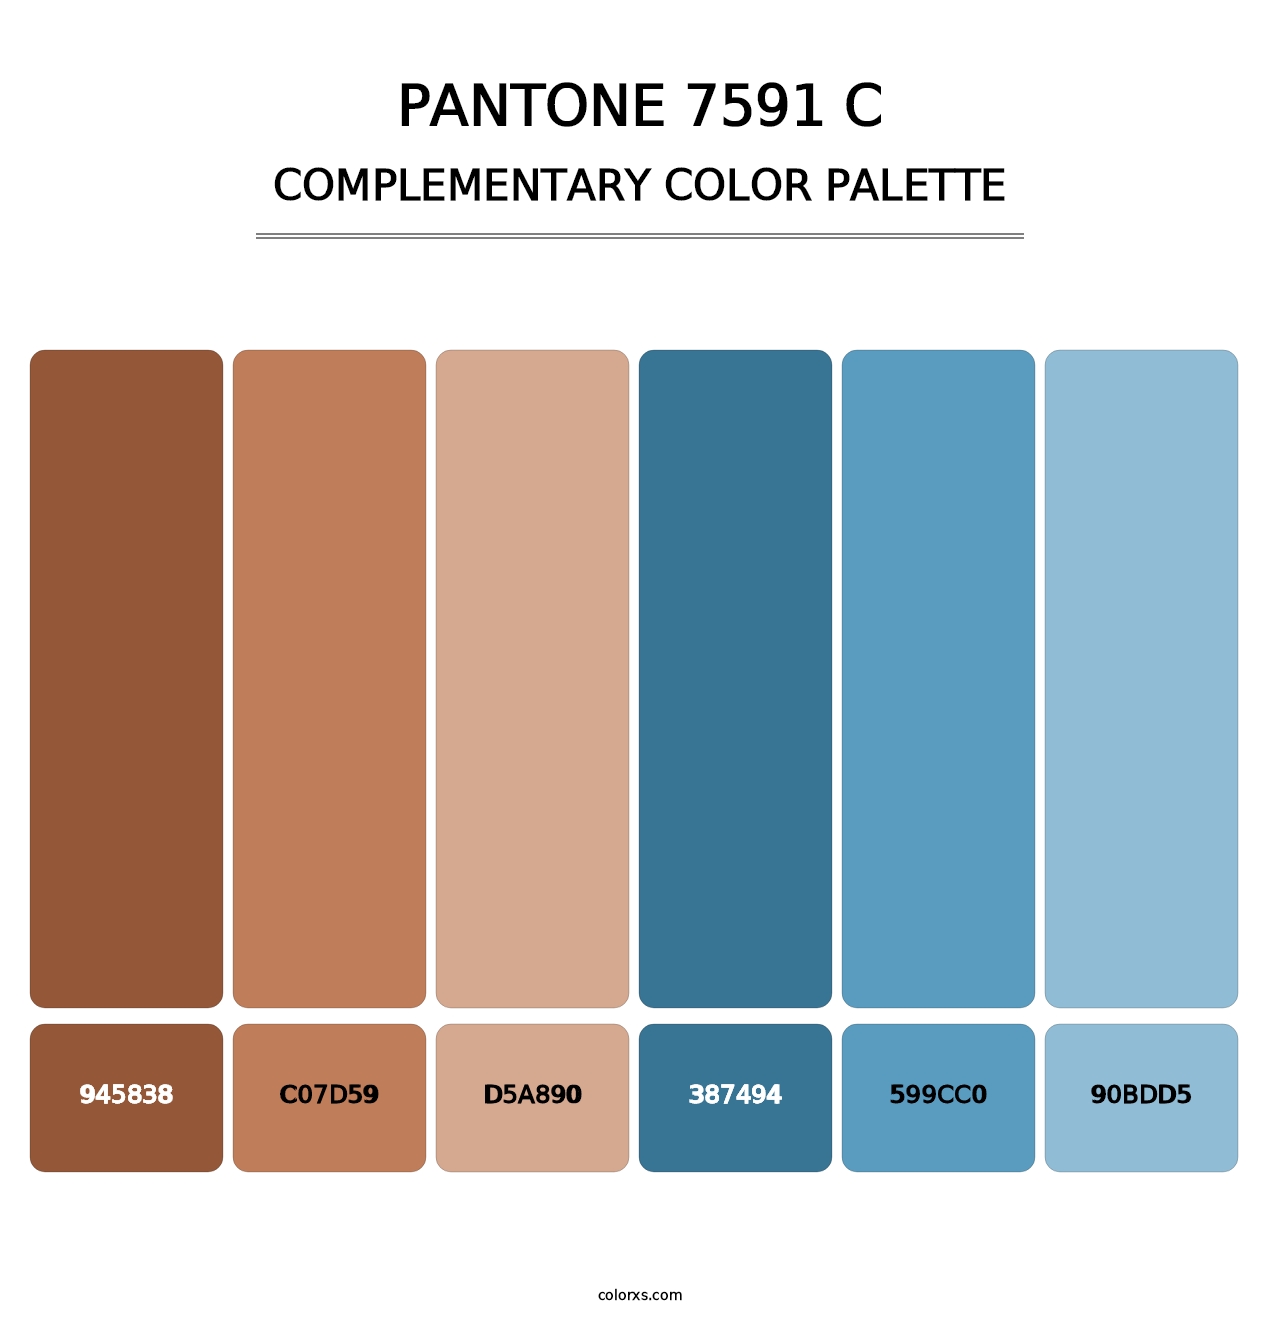 PANTONE 7591 C - Complementary Color Palette